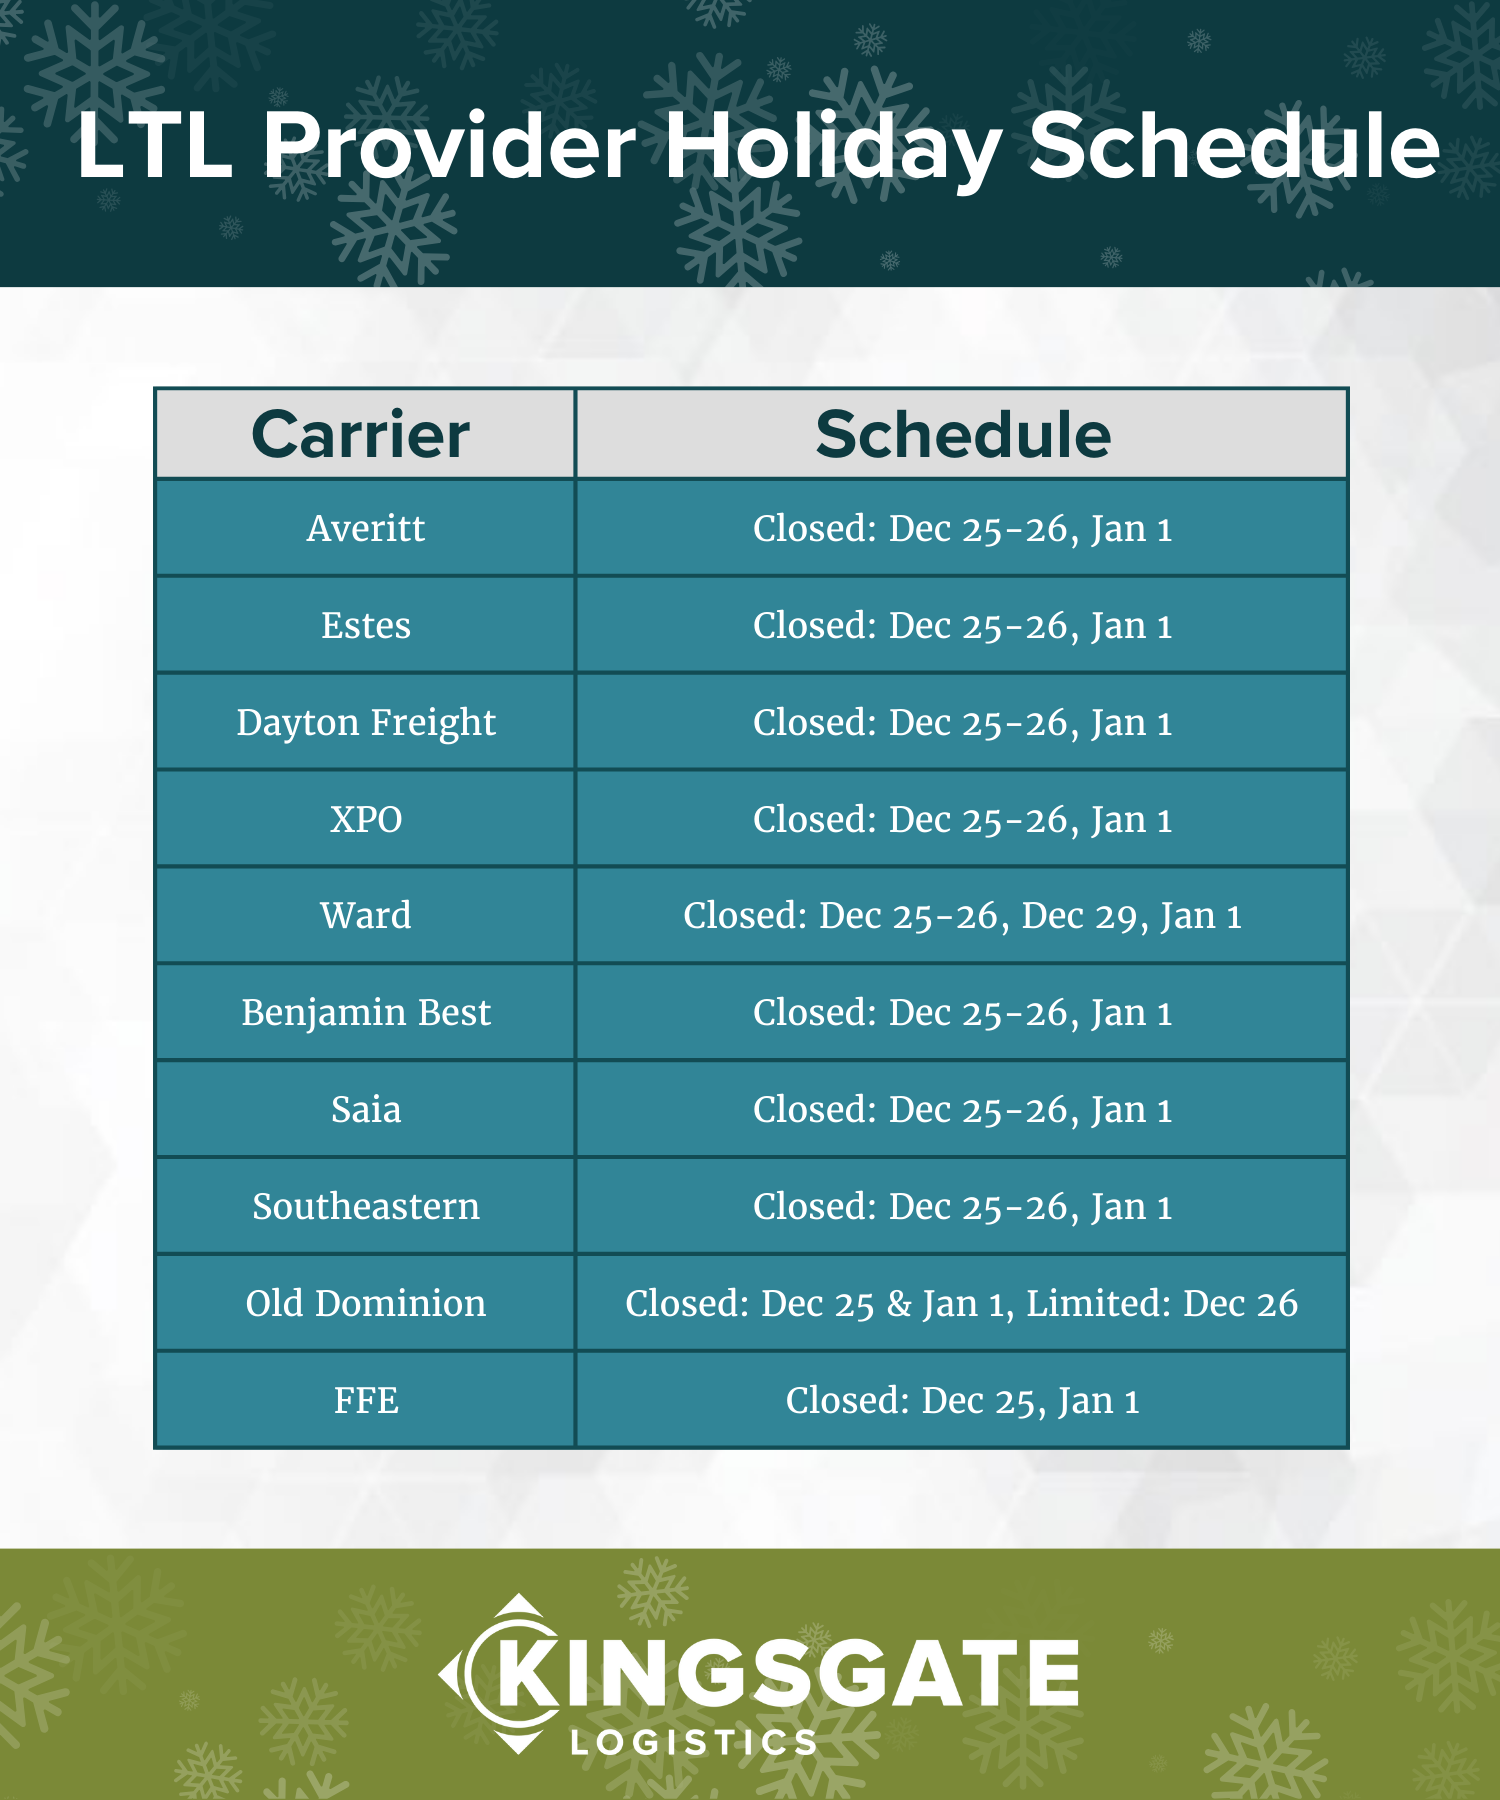 LTL Provider Holiday Schedule Kingsgate Logistics